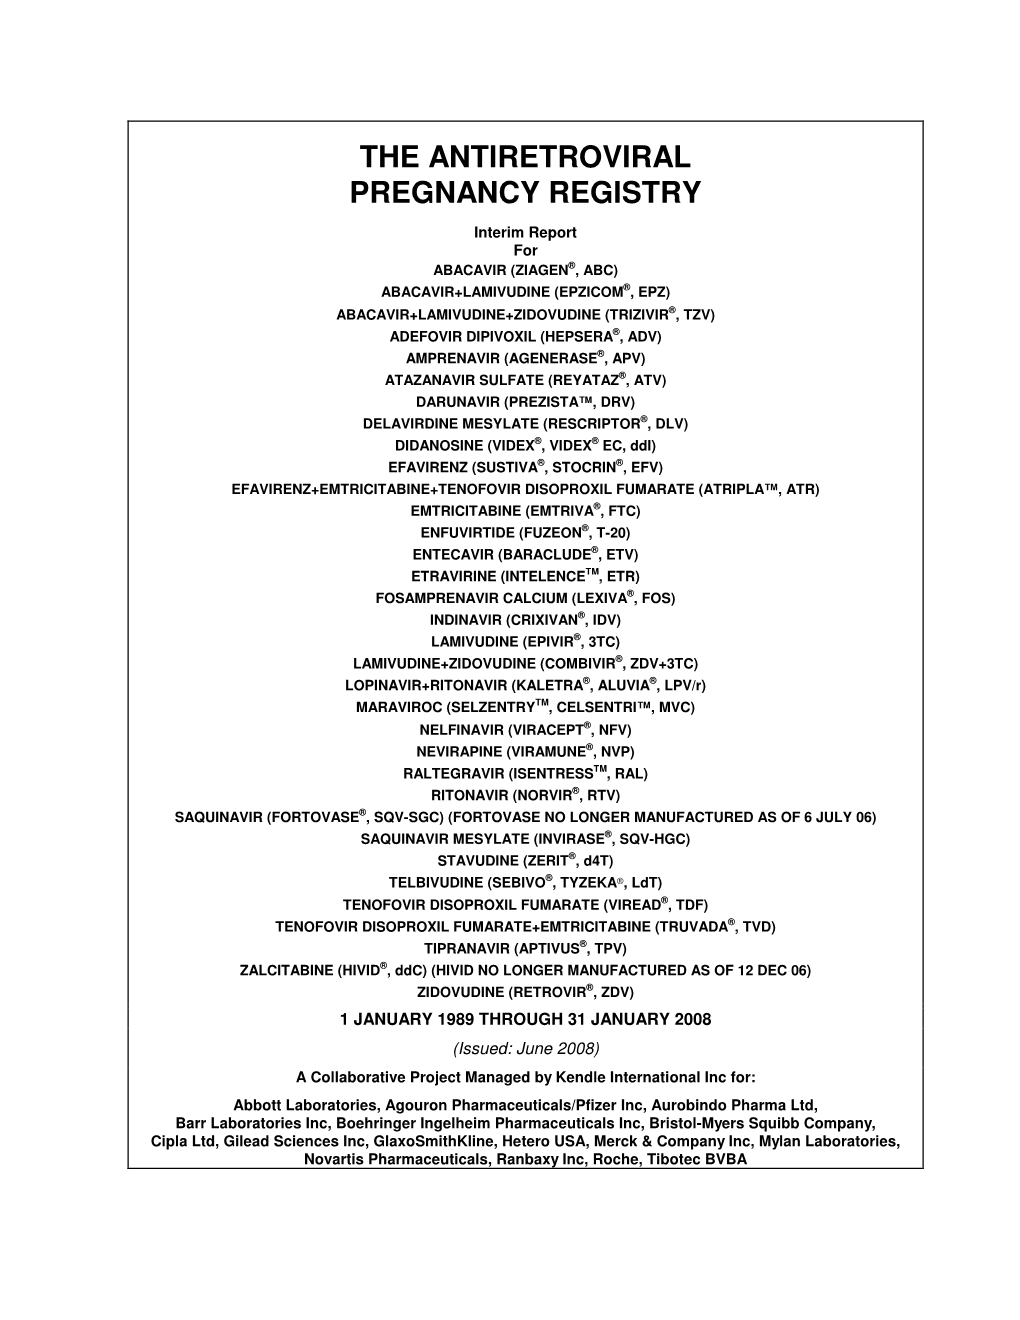 The Antiretroviral Pregnancy Registry